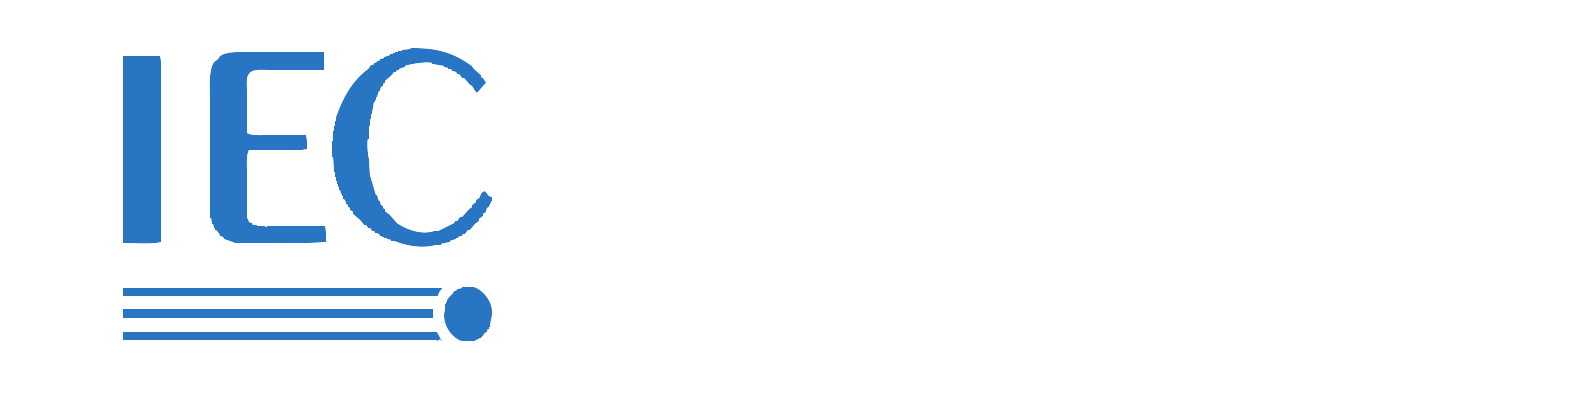 IEC 62196-2 EV şarj